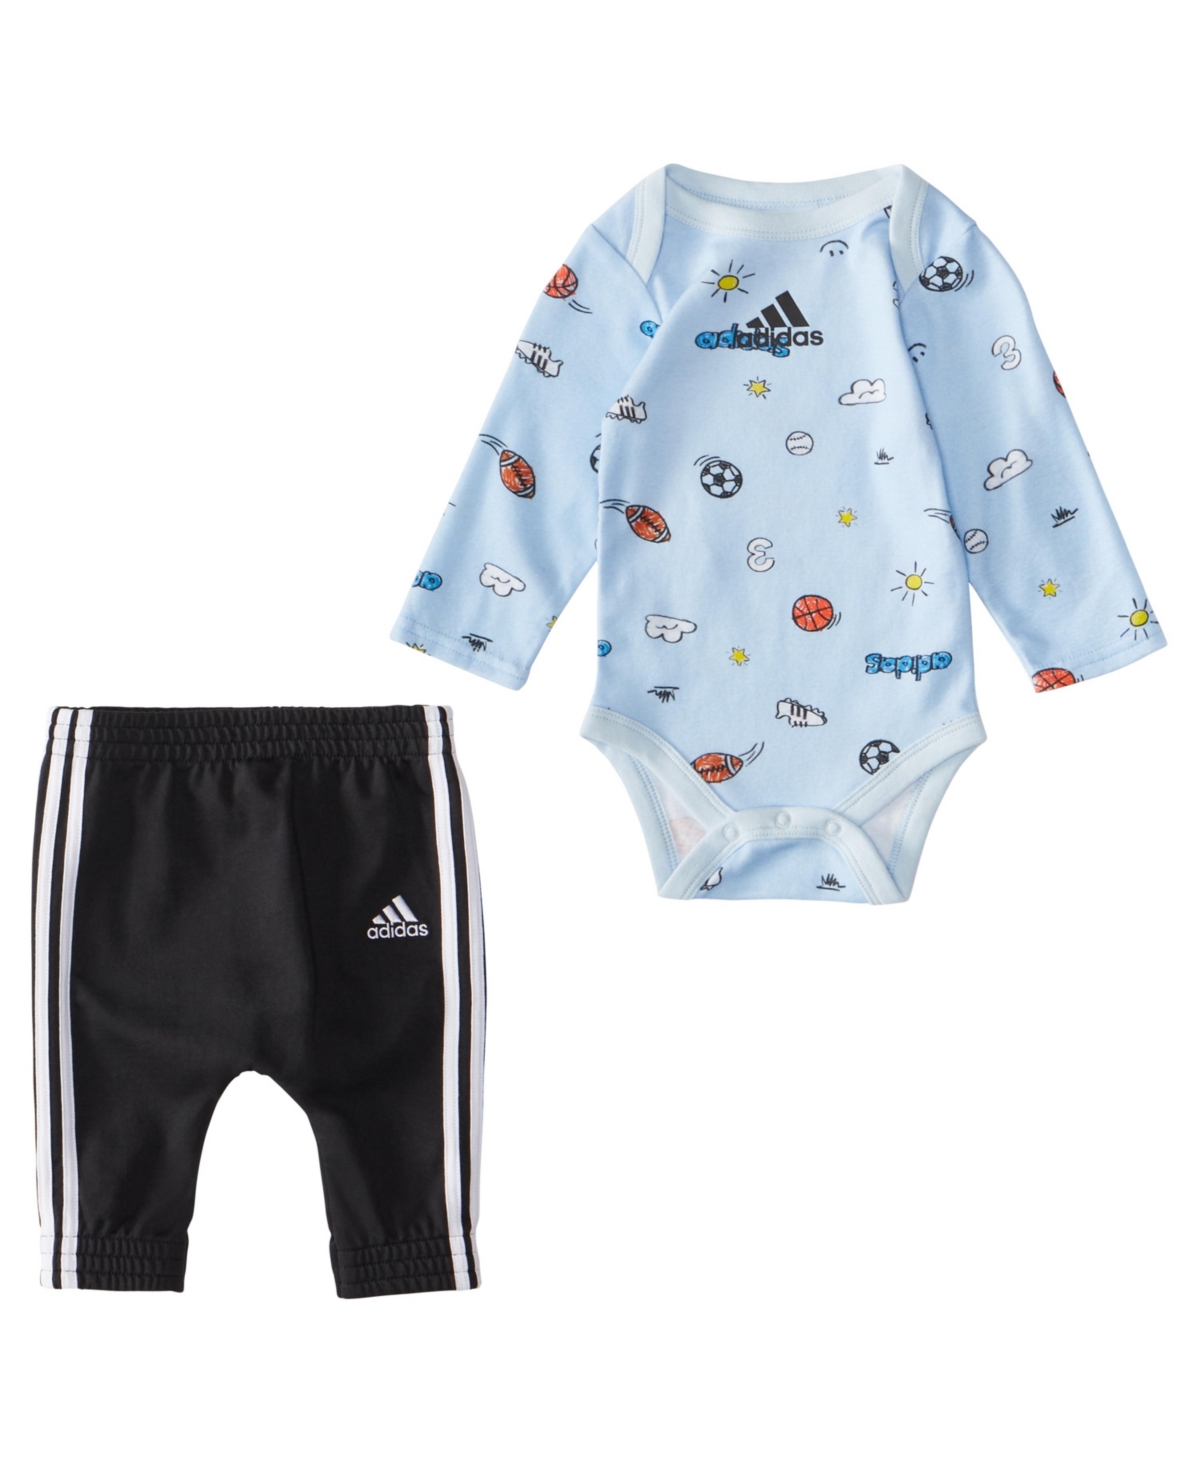 adidas Baby Boys or Baby Girls Sports Print Bodysuit Pants Set